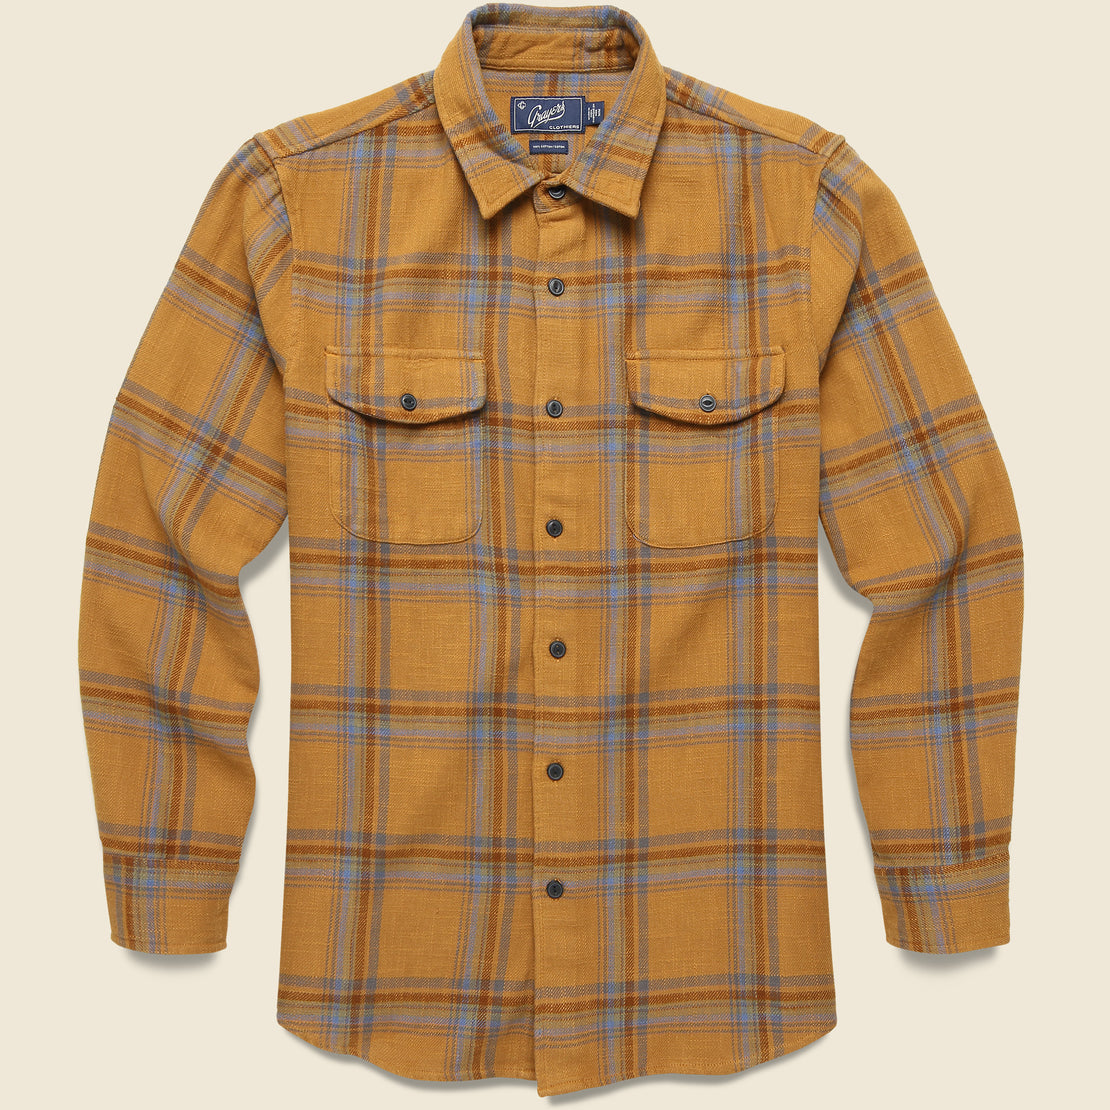 Grayers Vintage Slub Twill Shirt - Golden Brown/Blue